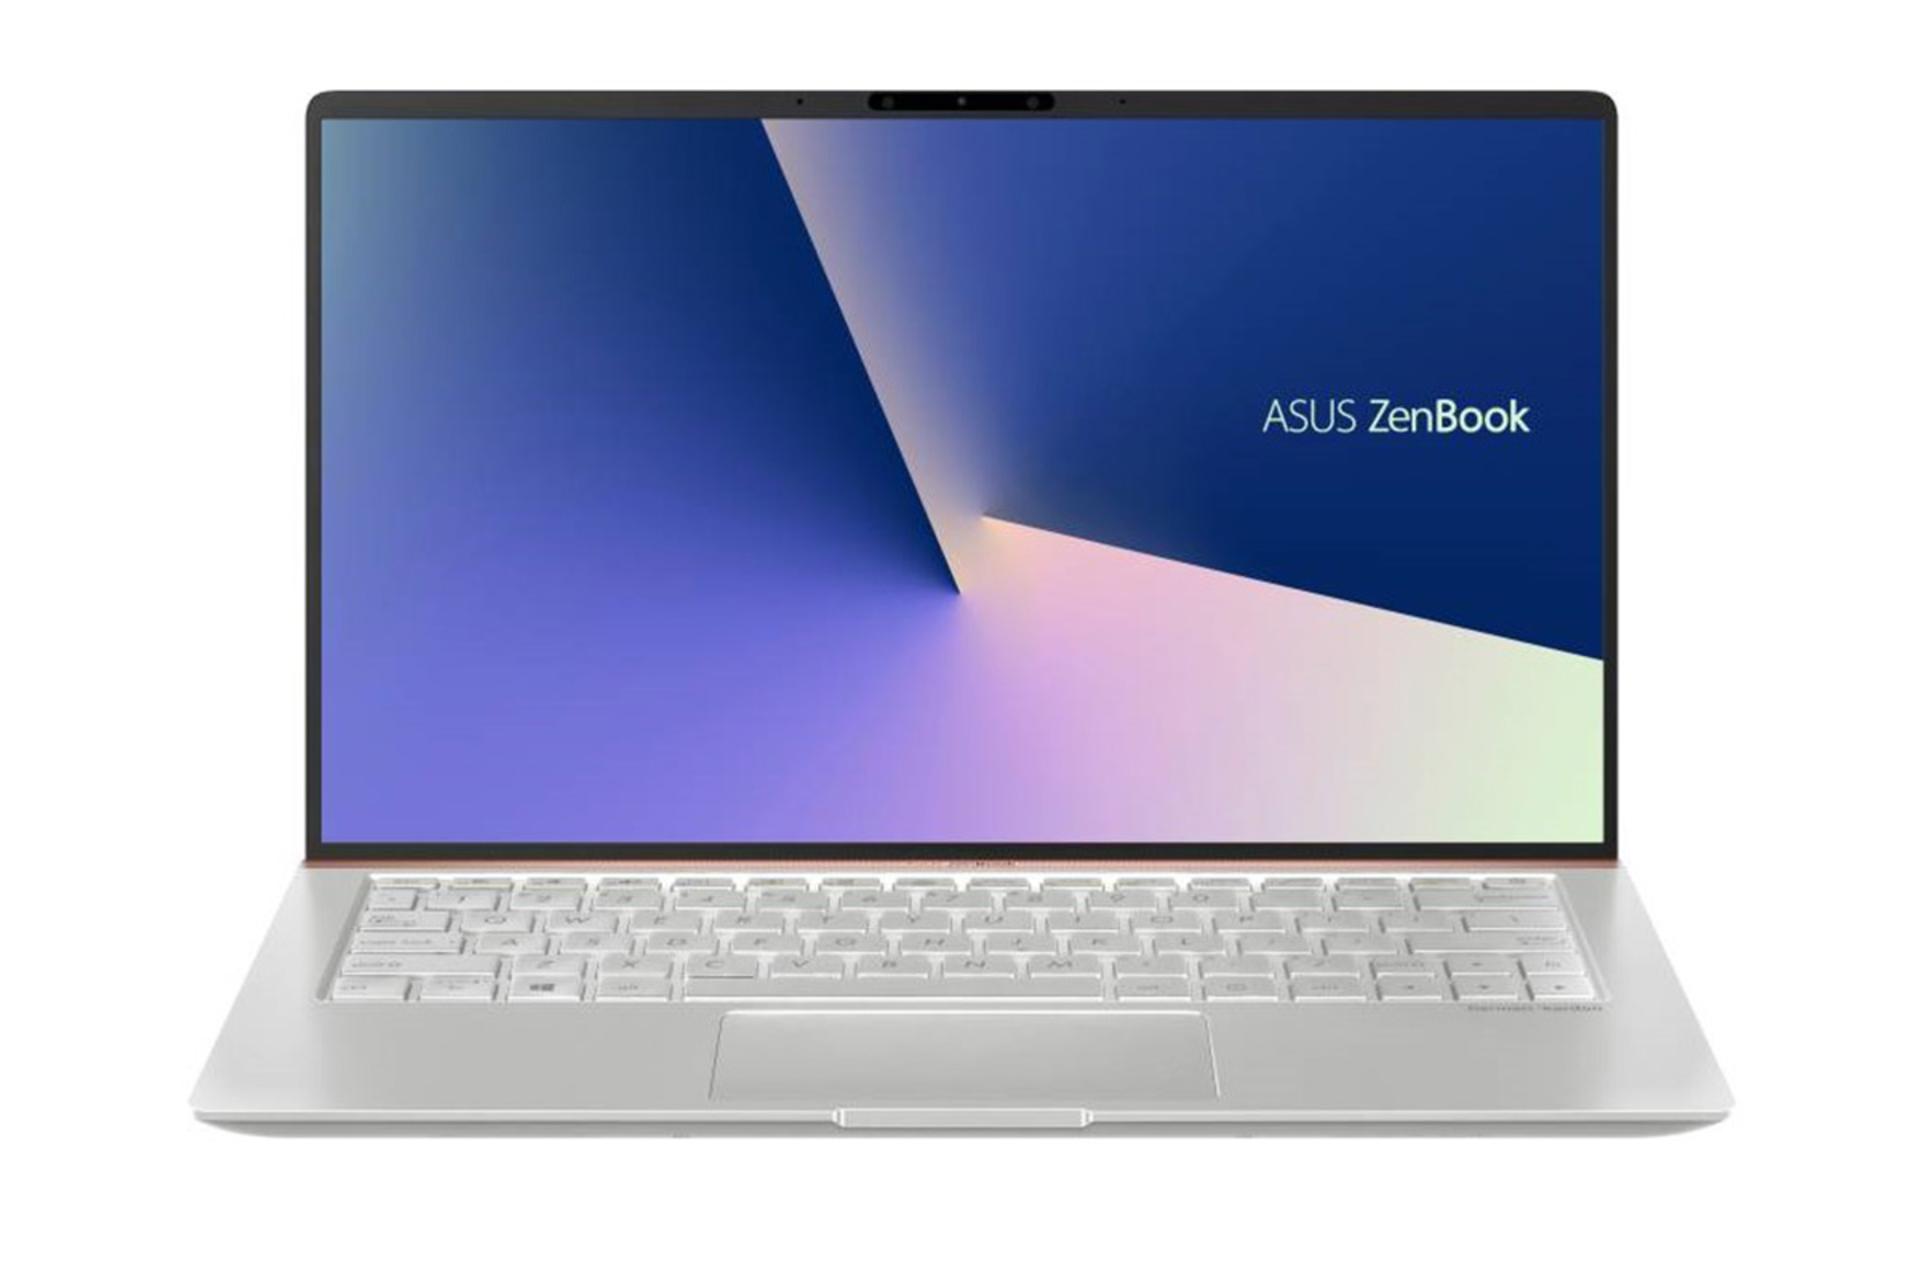 ASUS ZenBook UX333FN / ایسوس ذن بوک